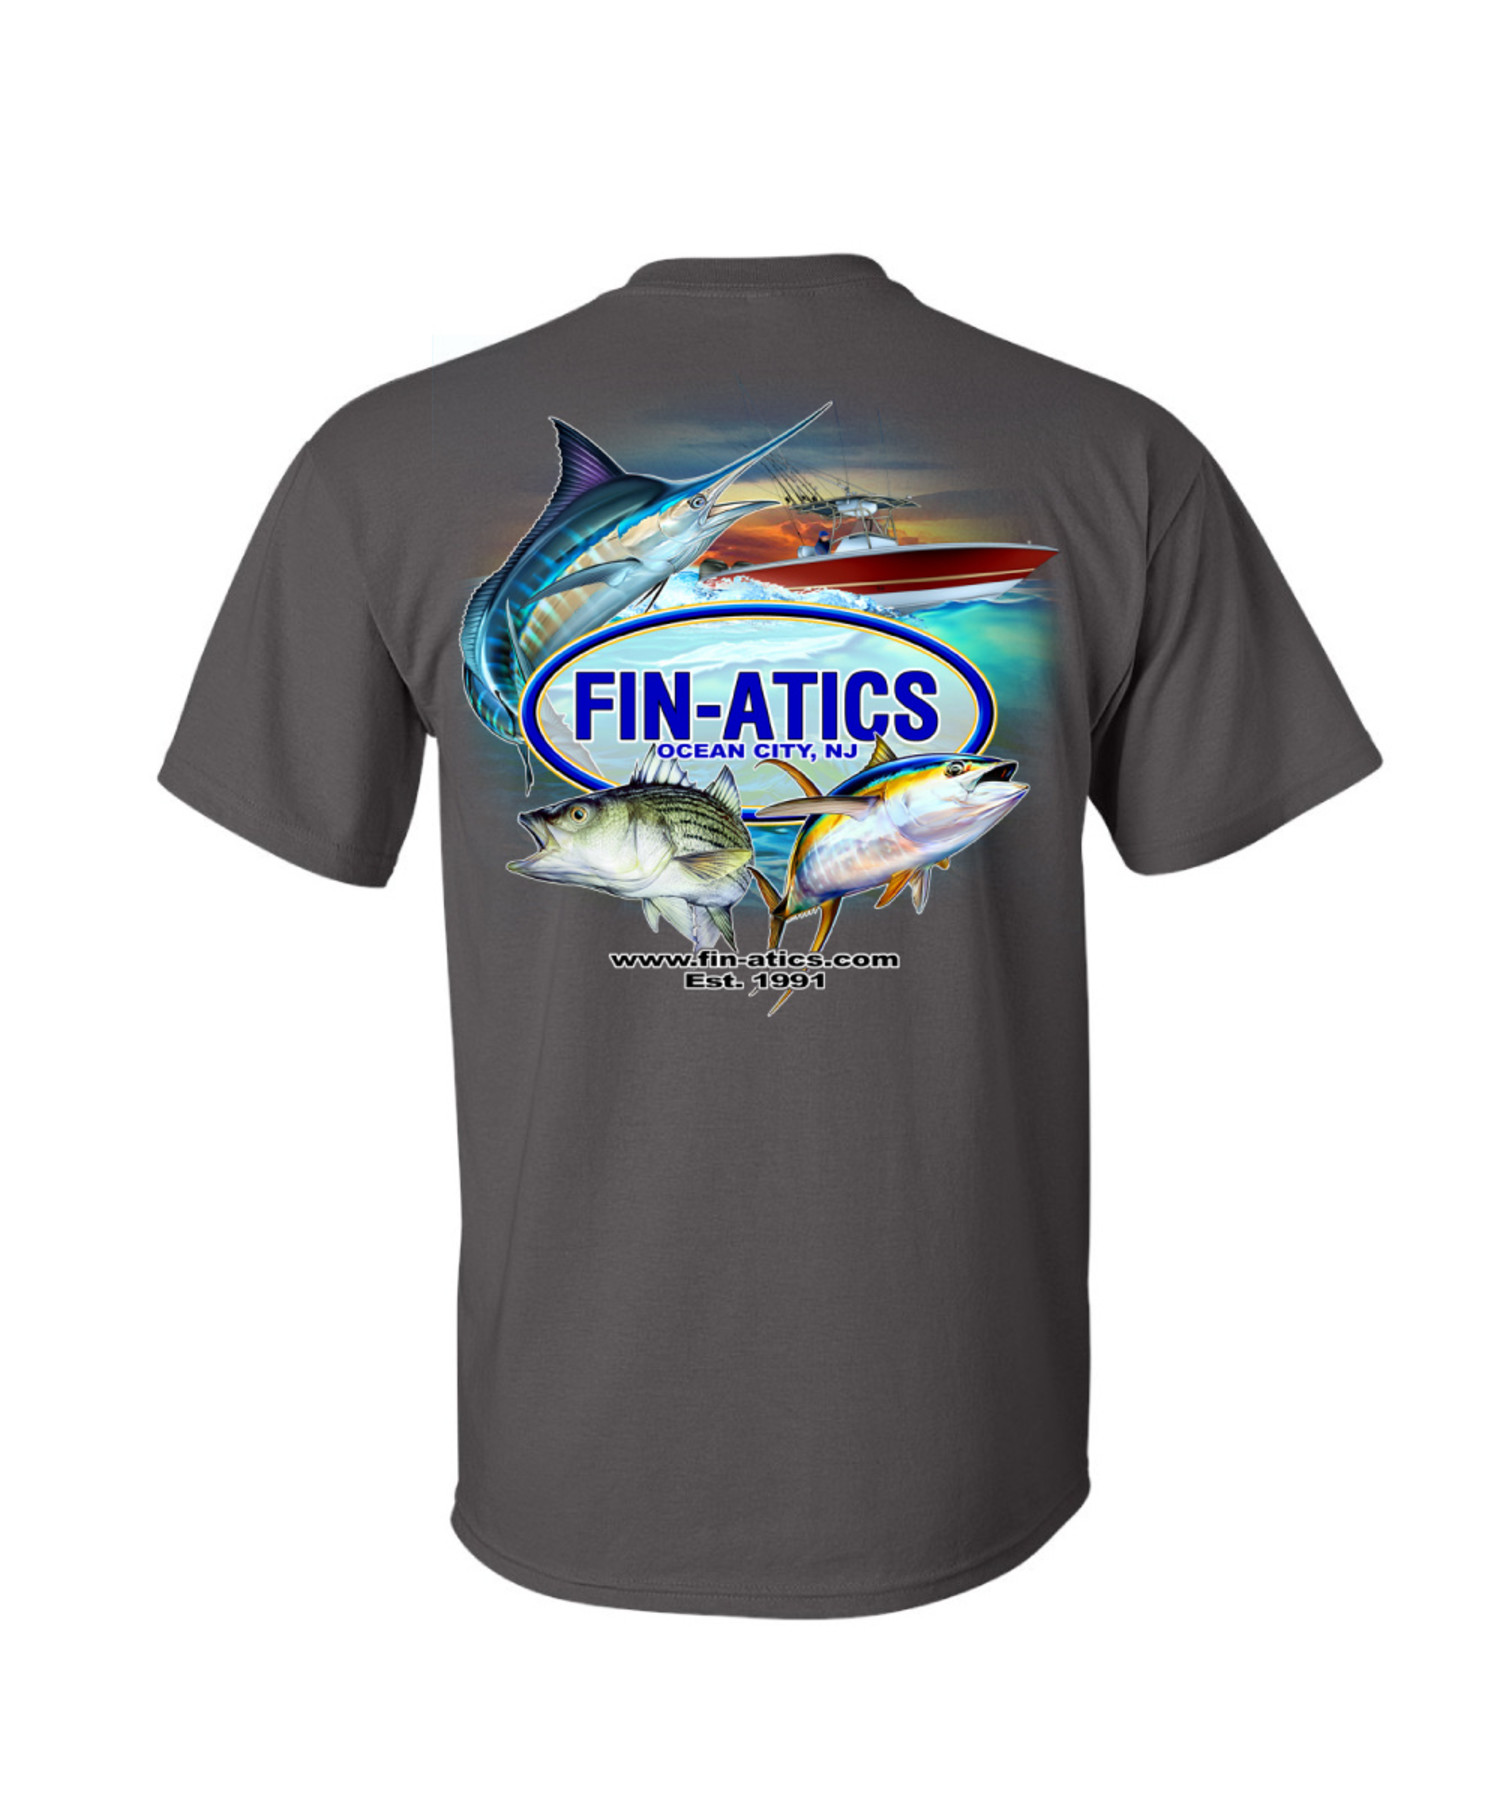 Fin-atics Classic Logo Men's Short Sleeve T-Shirt - Fin-atics